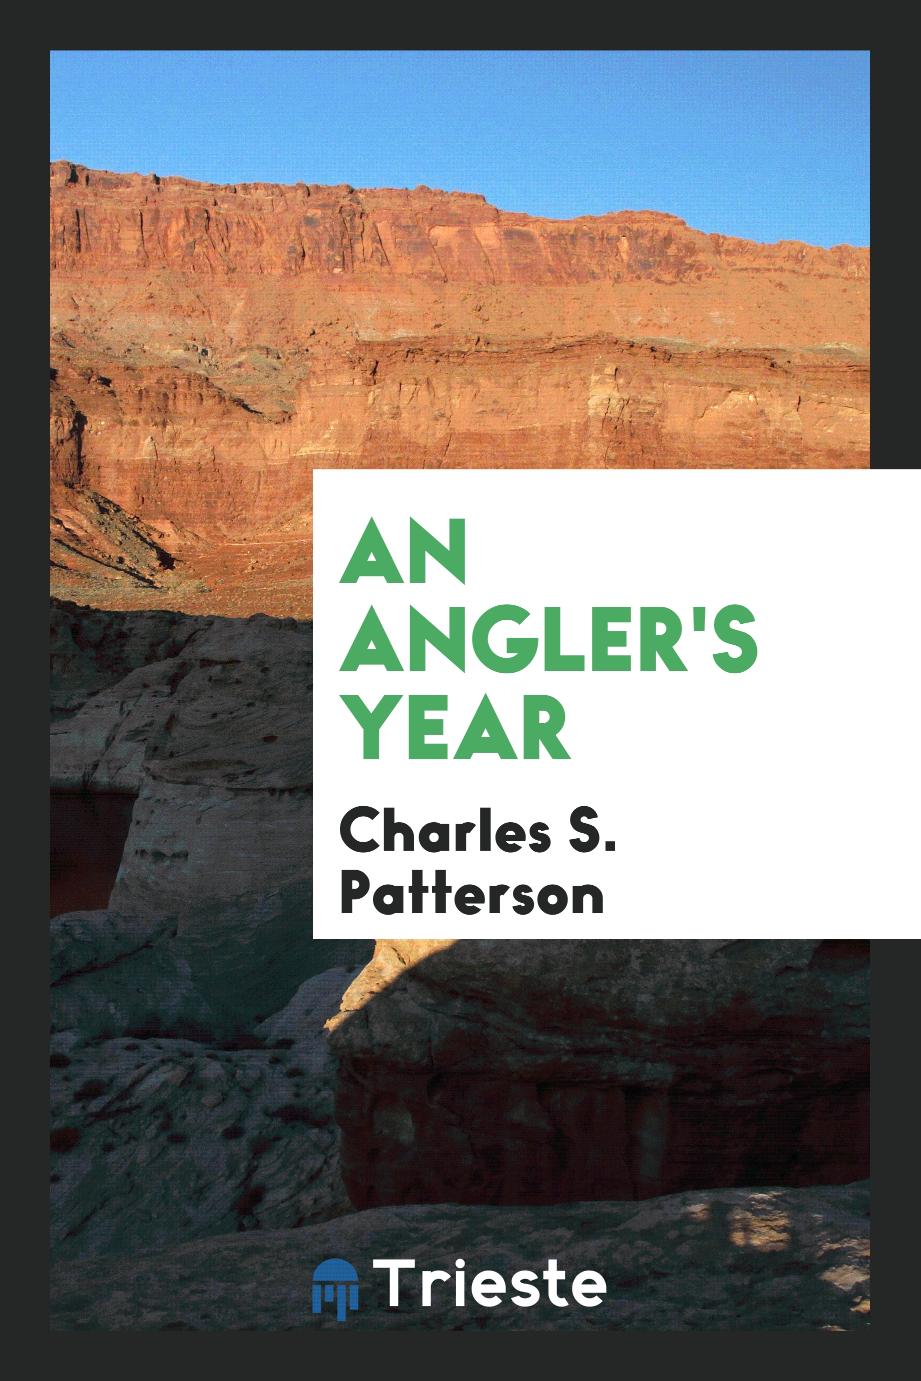 An angler's year